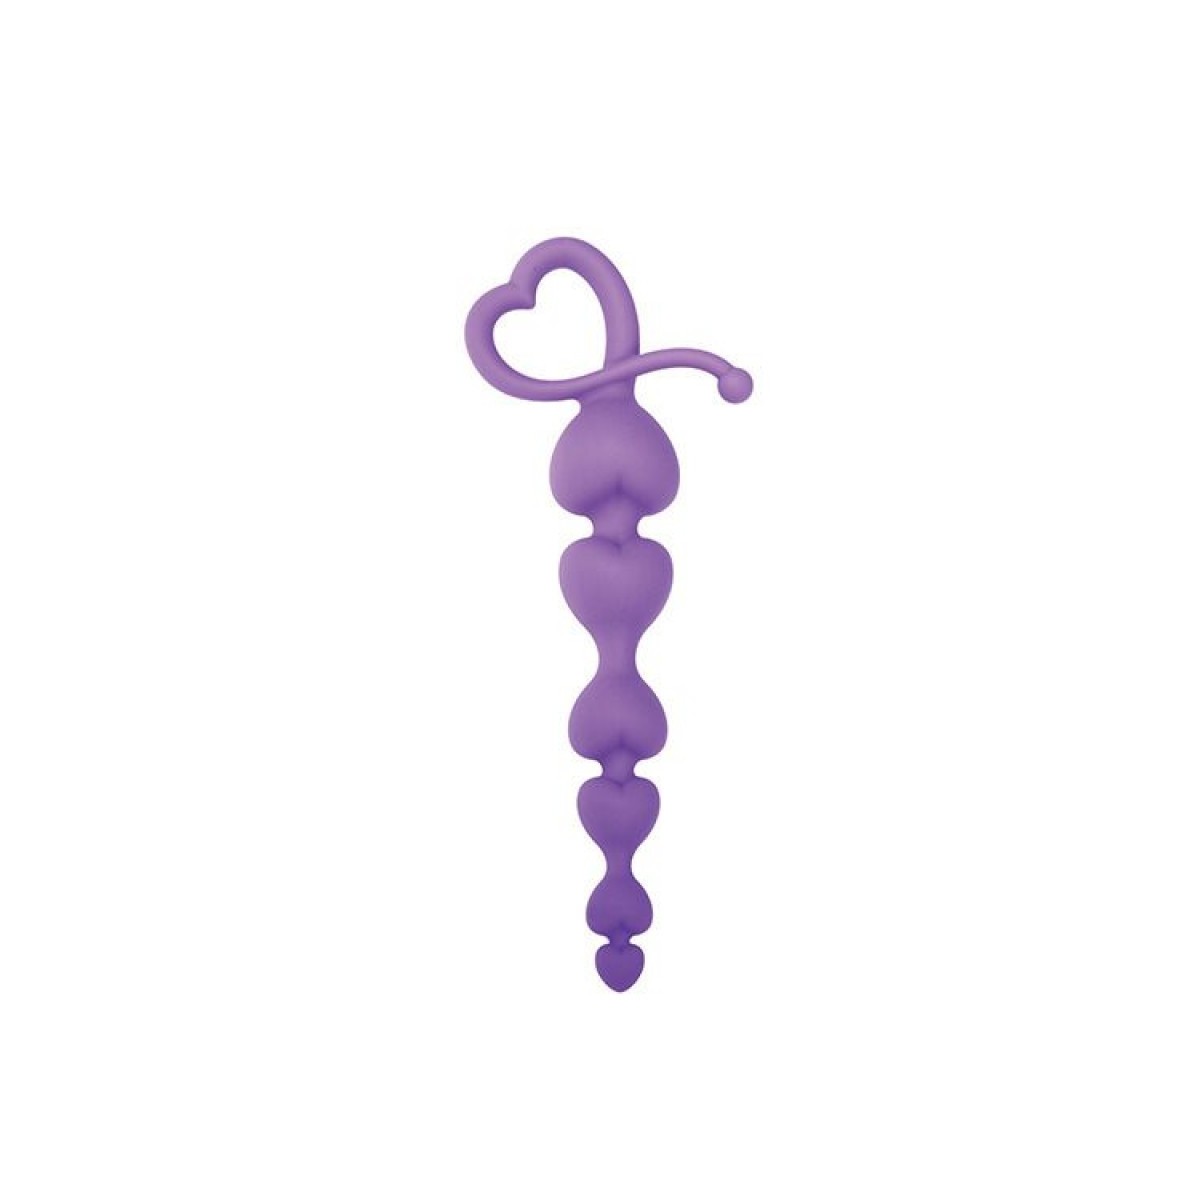 Dilatatore Catena anale Hearty purple